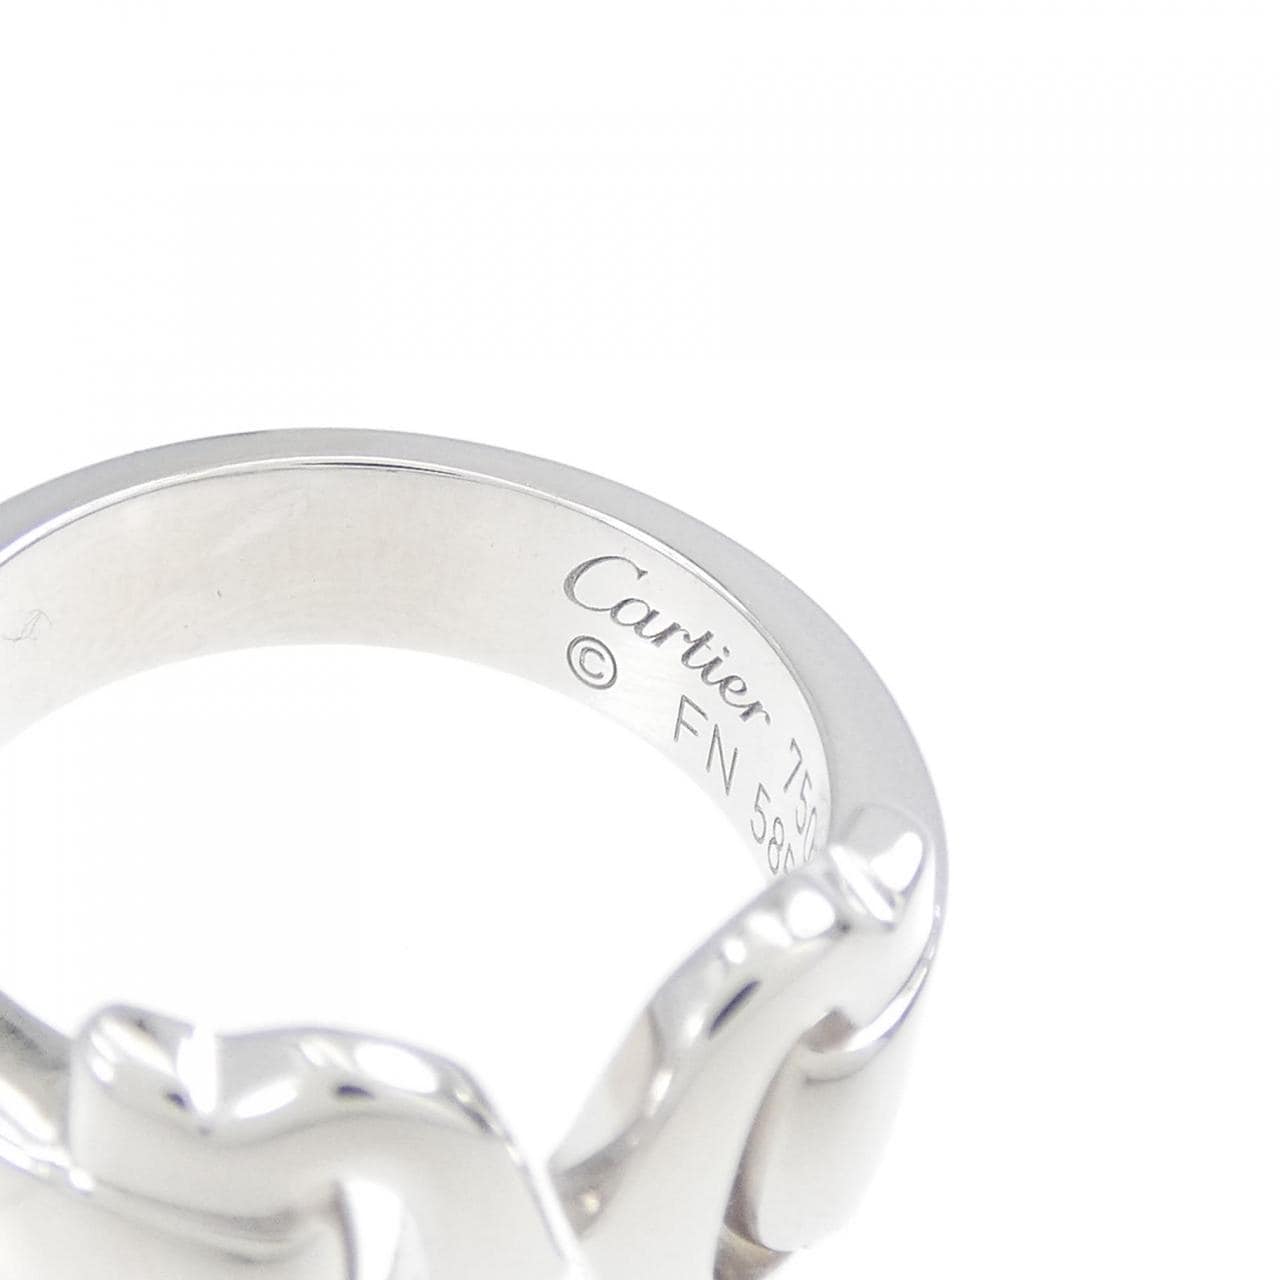 Cartier 2C motif ring